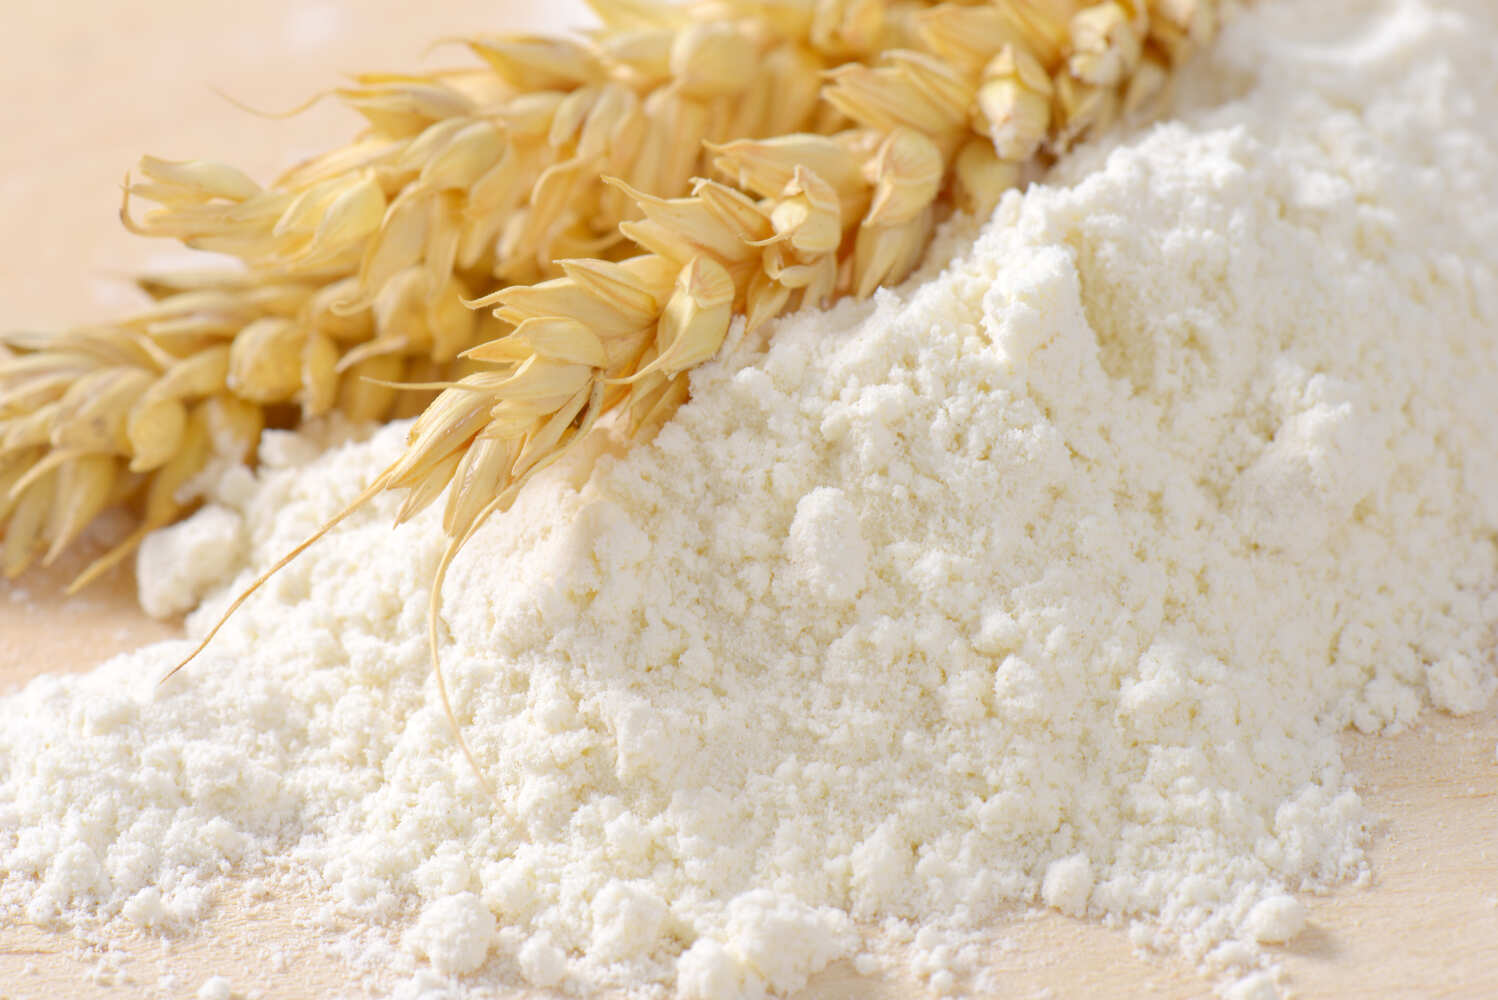 wheat-flour-and-wheat-ears-2021-08-26-17-13-30-utc-2-1-1.jpg